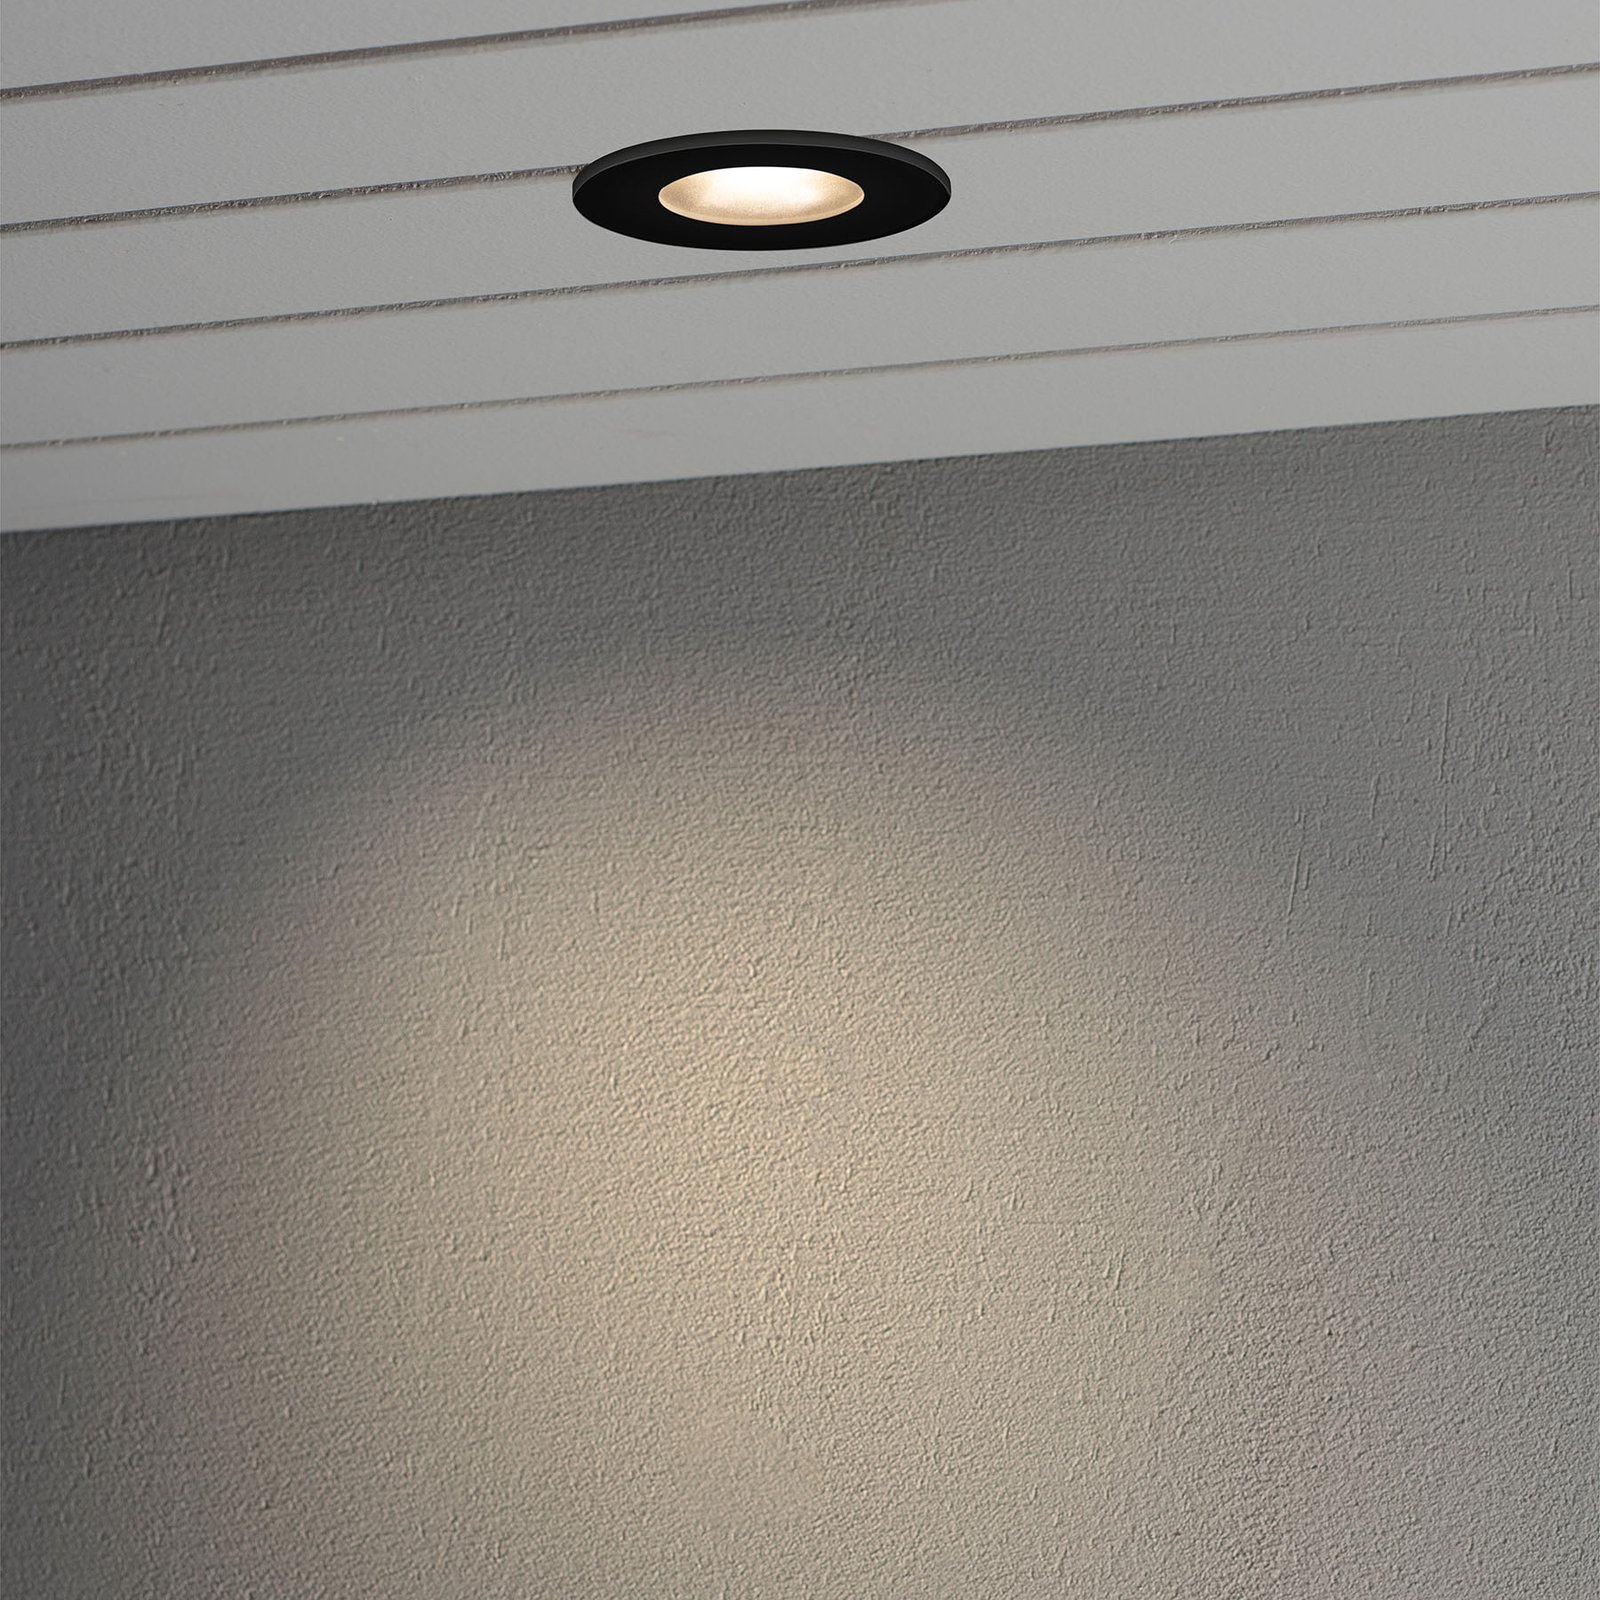 Spot LED incasso 7875, soffitti esterni nero